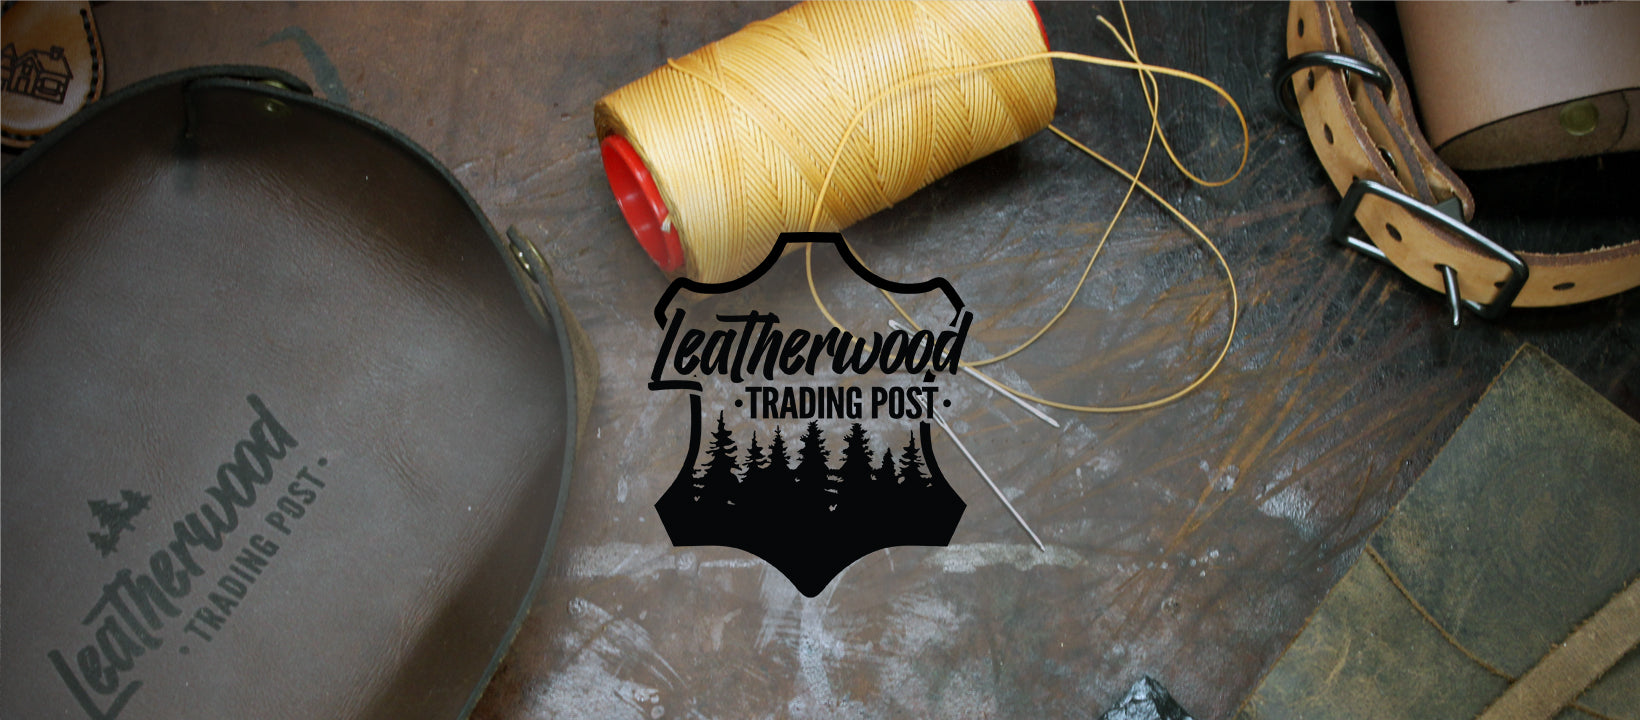 Leatherwood Trading Post